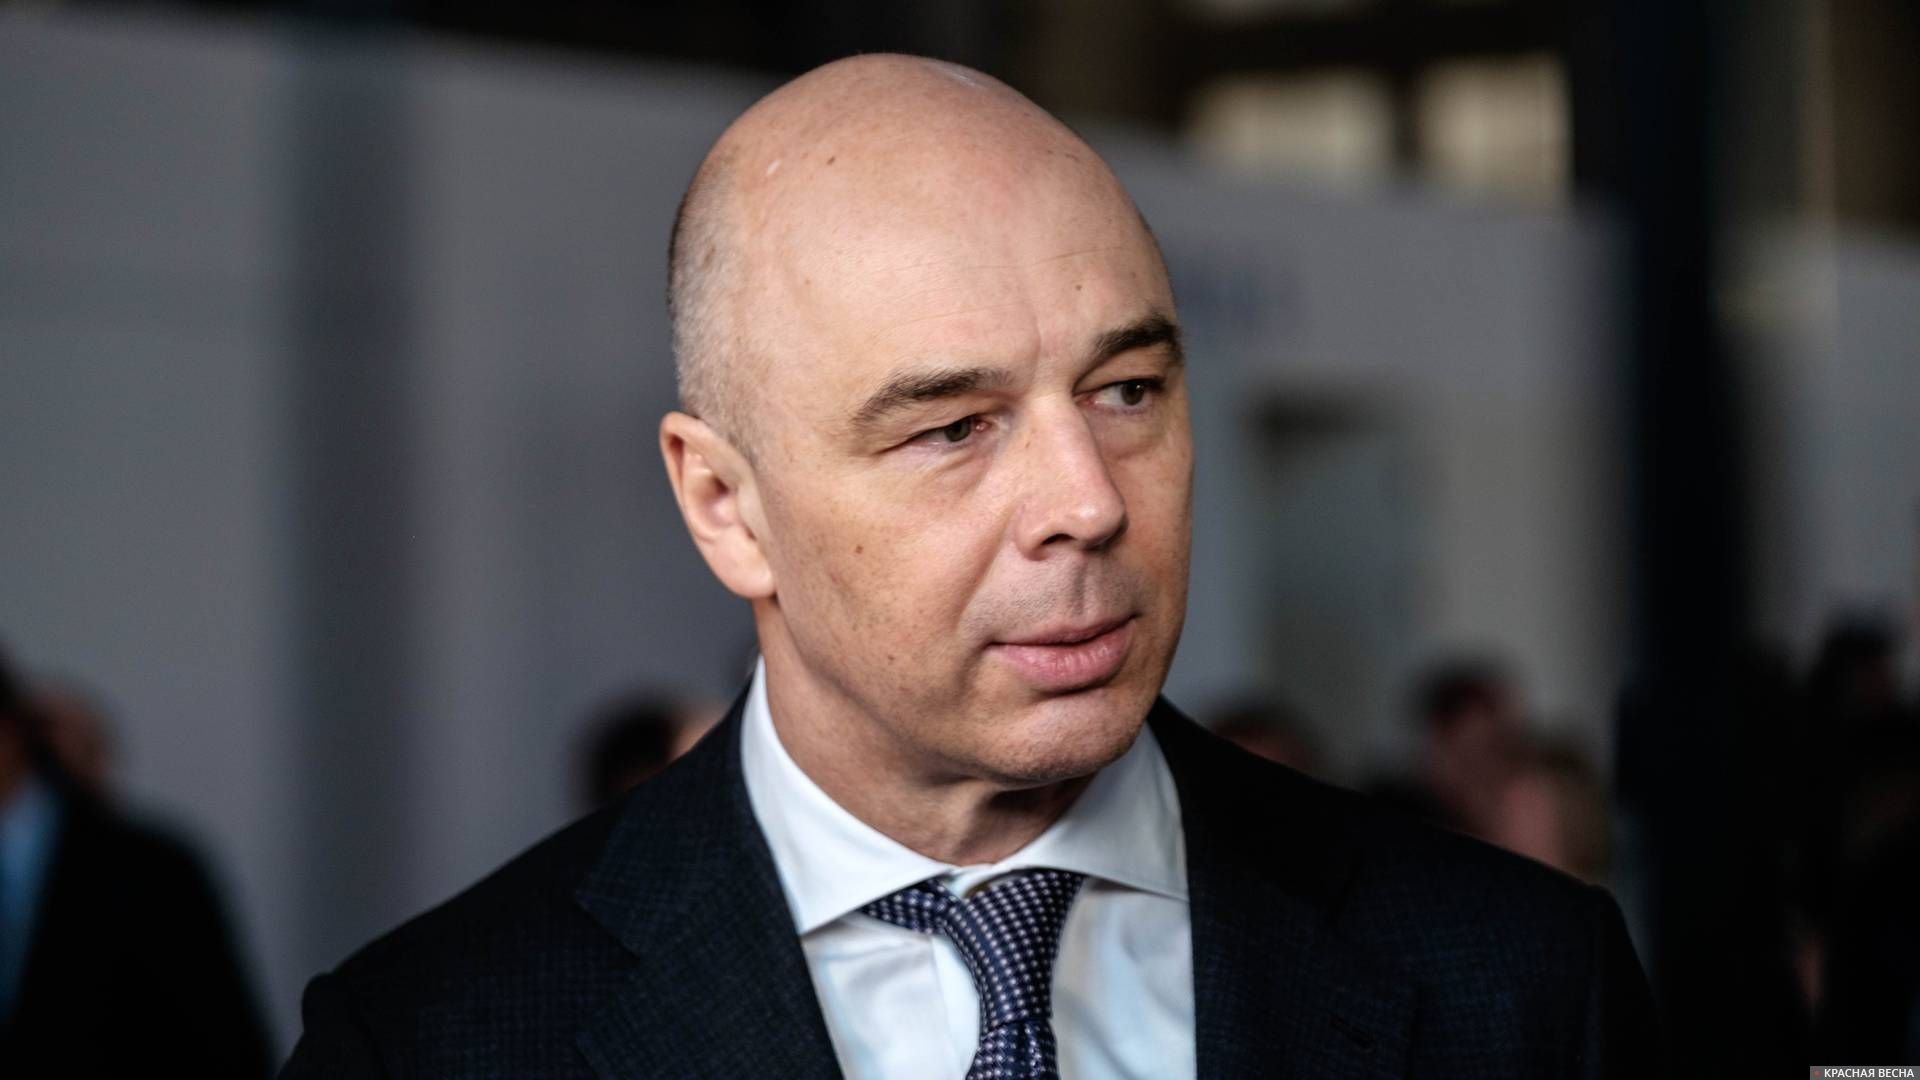 Министр финансов Антон Силуанов